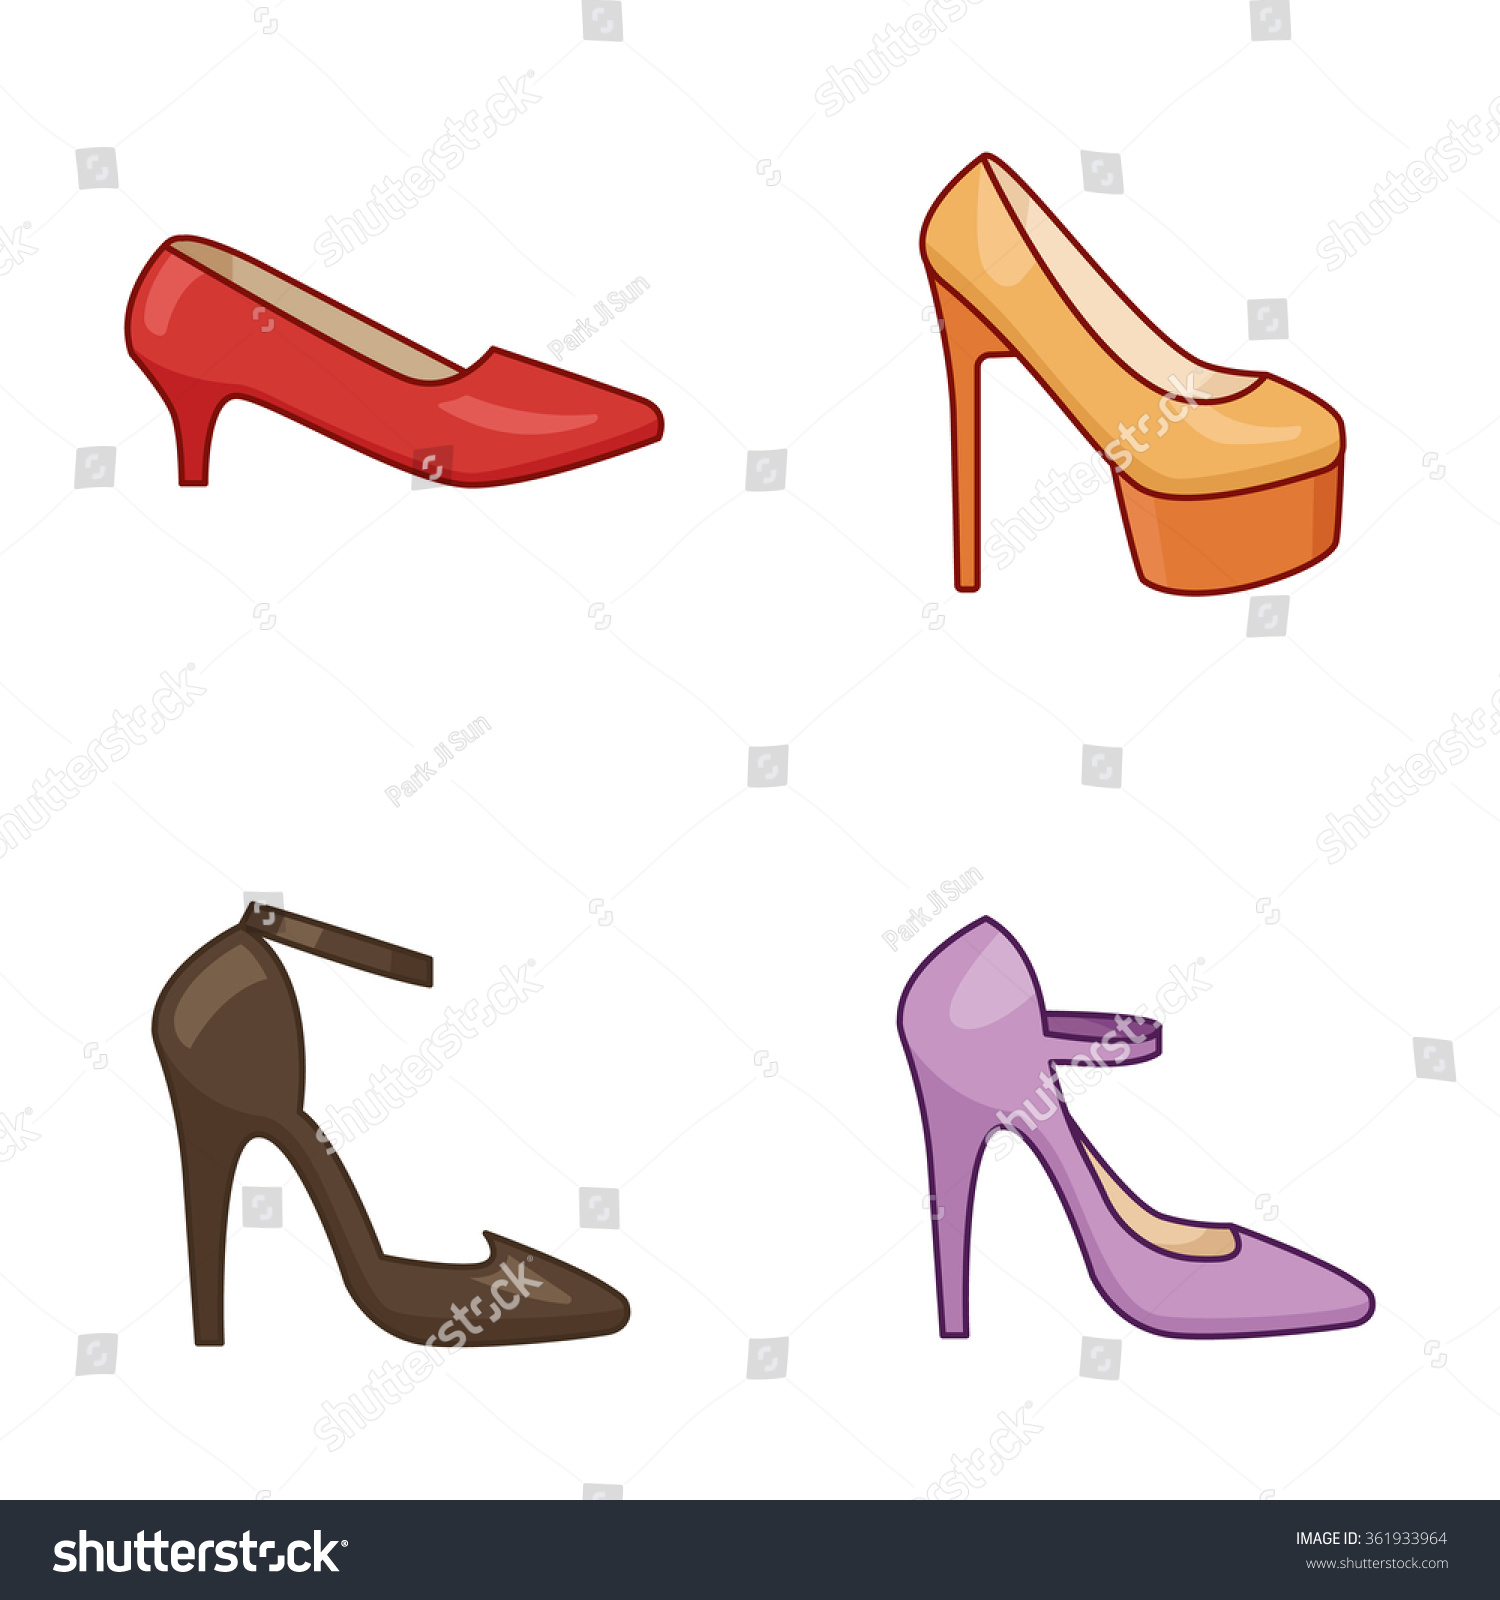 Women Shoes Vector Icons Stock Vector 361933964 - Shutterstock